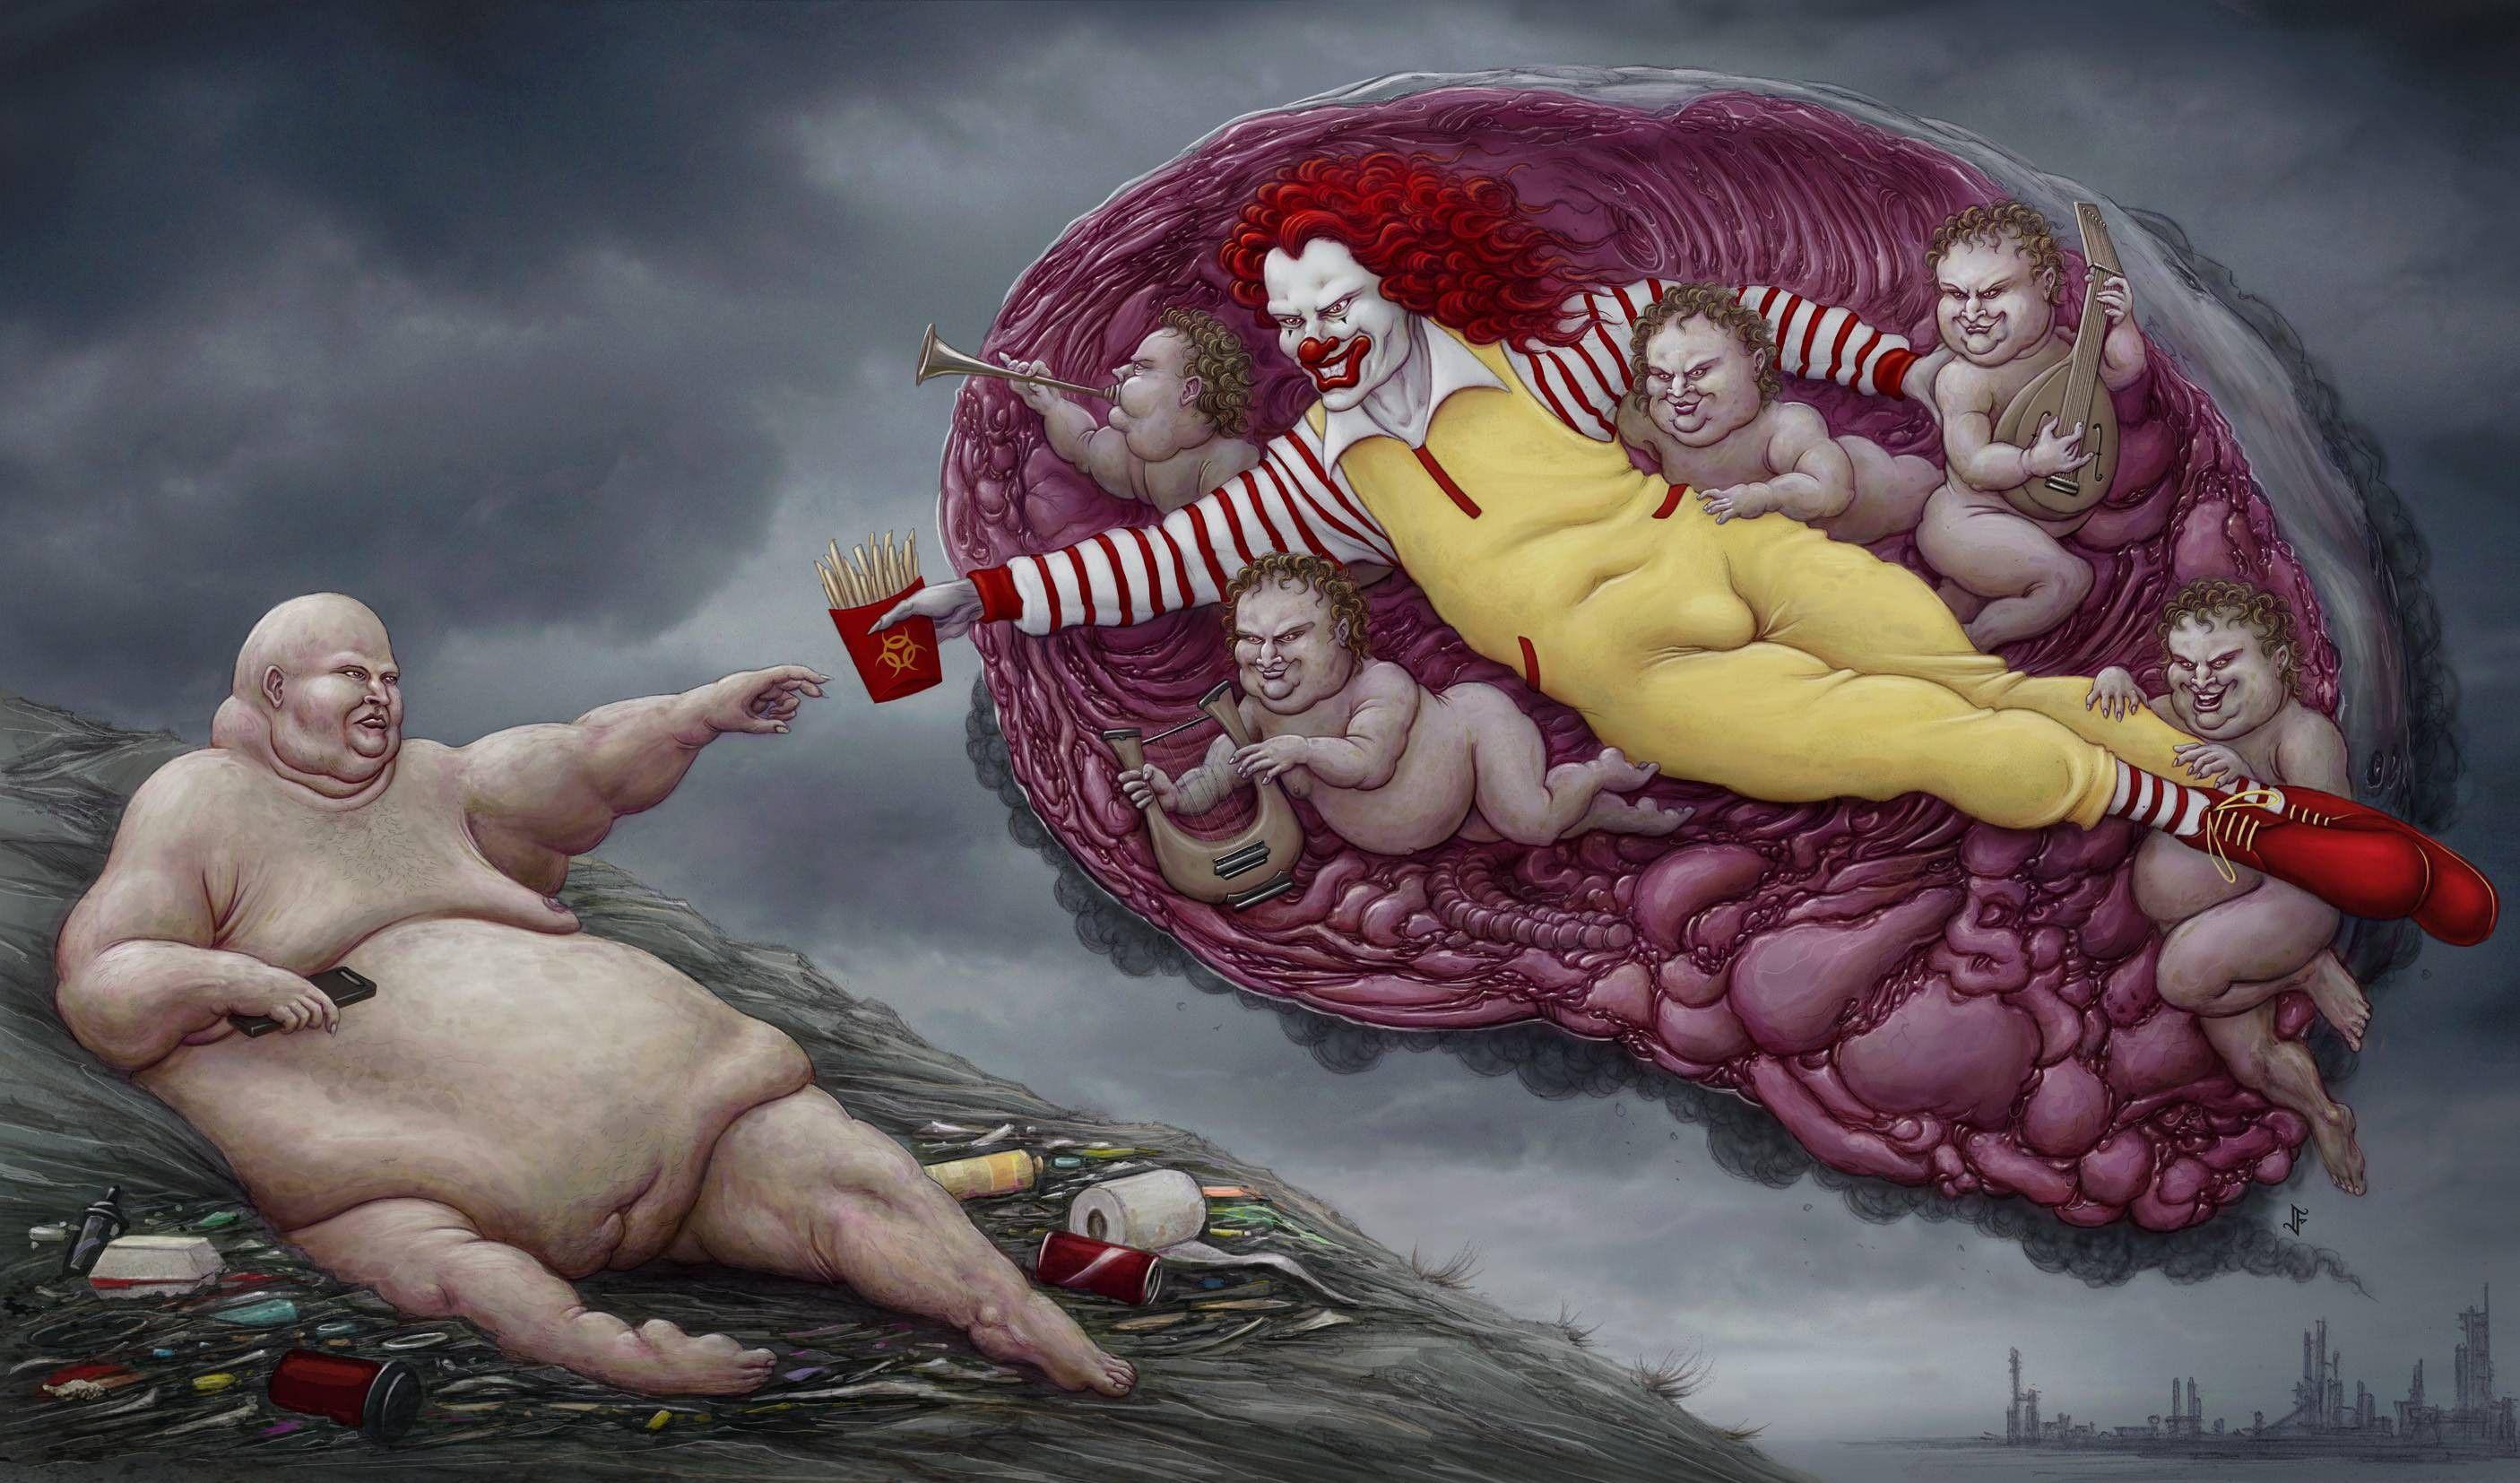 Ronald McDonald, #The Creation of Adam, #McDonald's, #dark humor